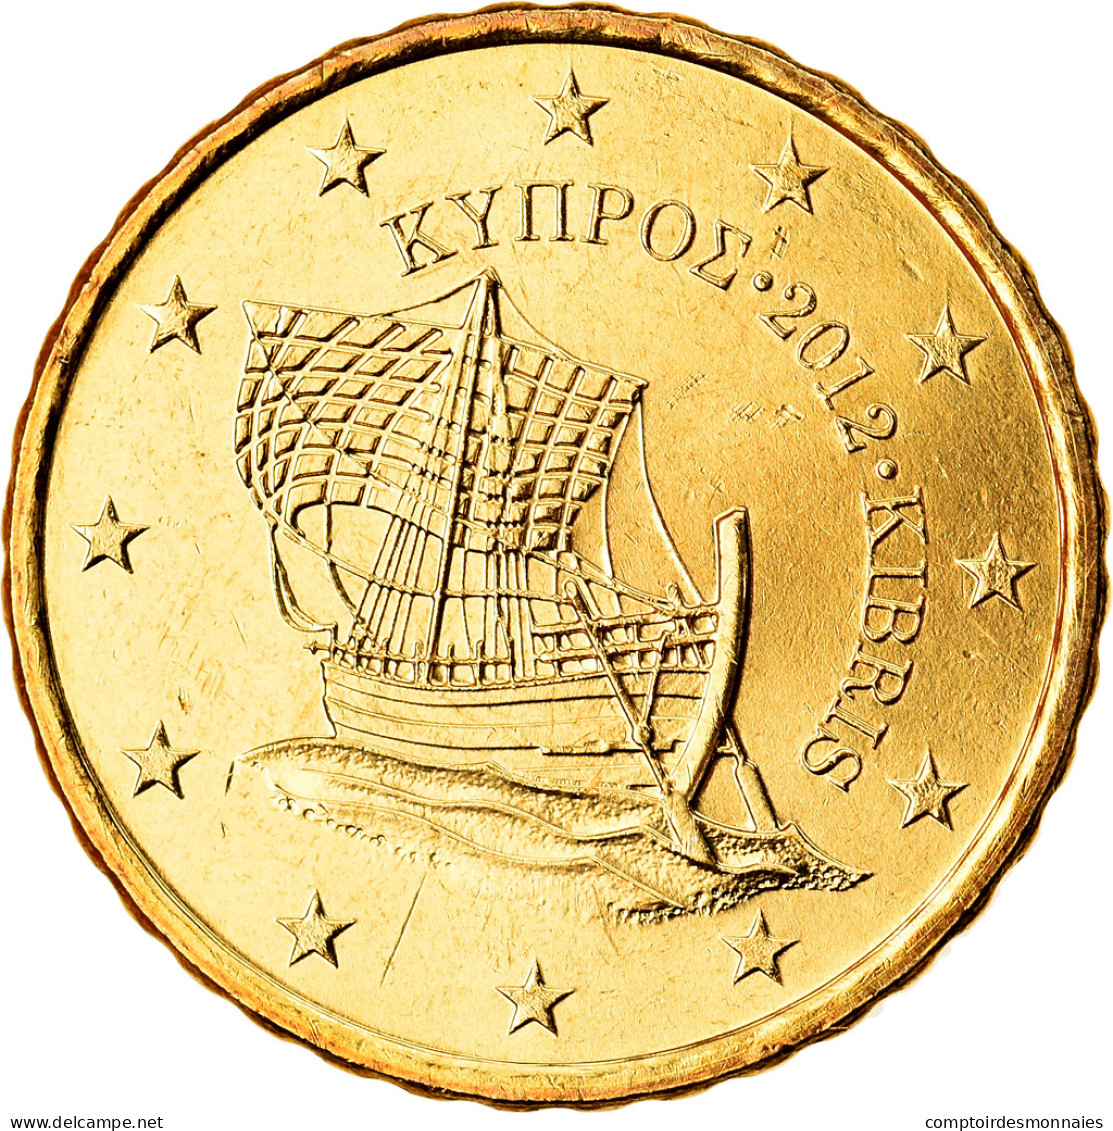 Chypre, 10 Euro Cent, 2012, SPL, Laiton, KM:81 - Cyprus